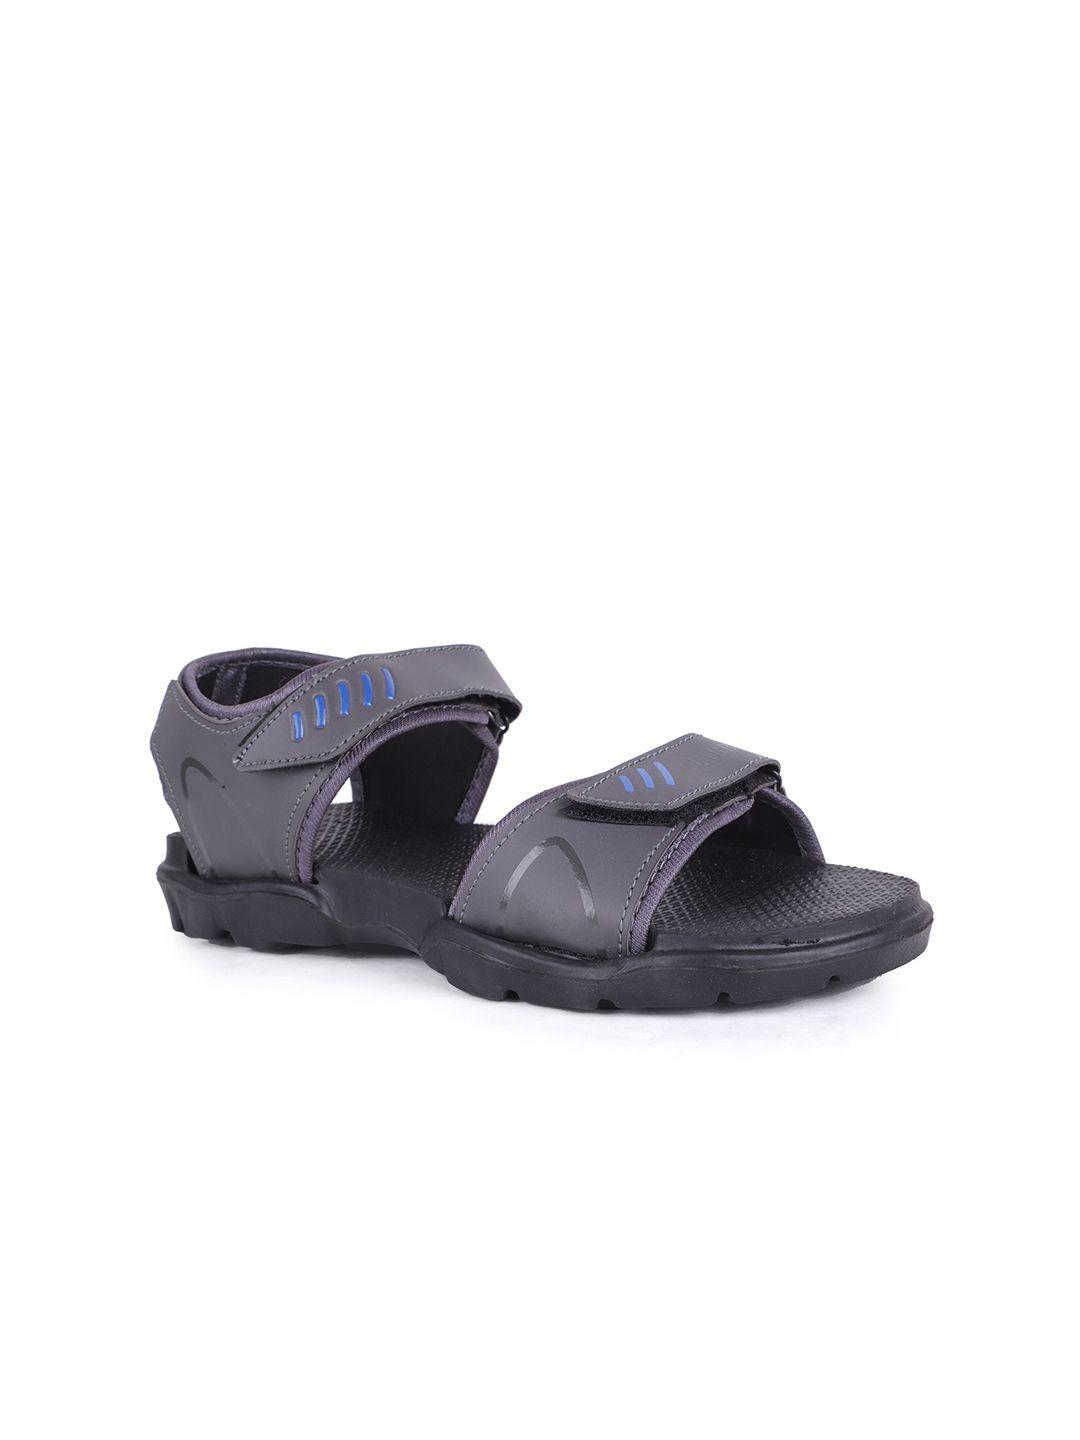 FABBMATE Men Grey Sports Sandals